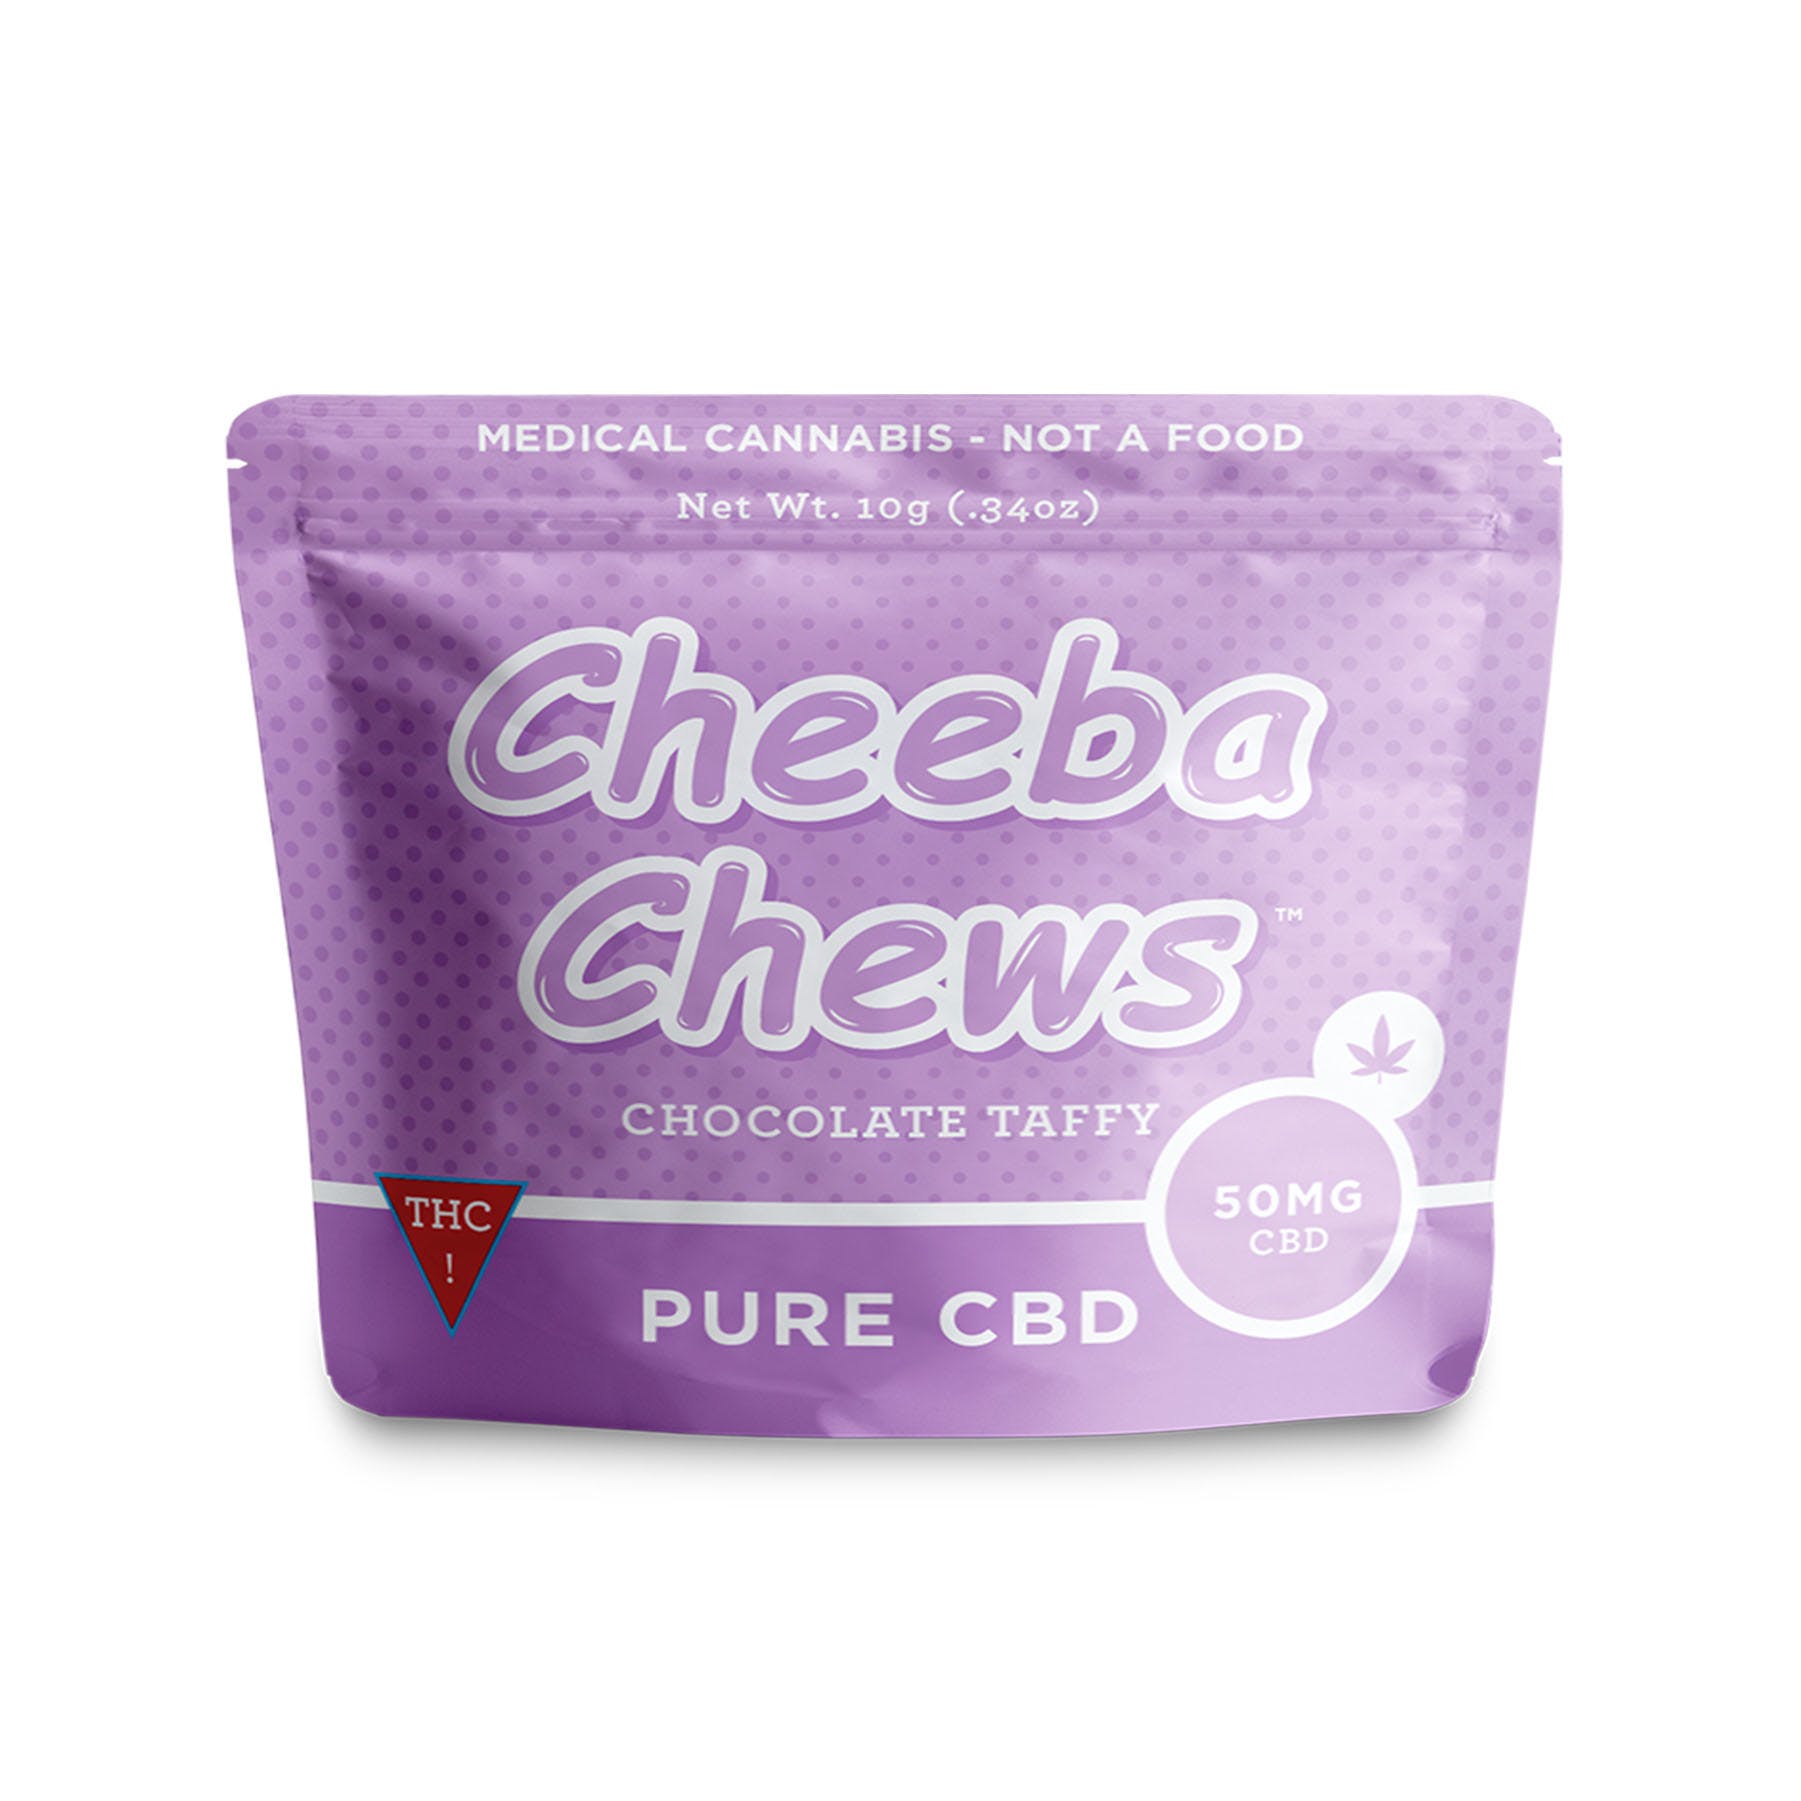 edible-cheeba-chew-cbd-purple